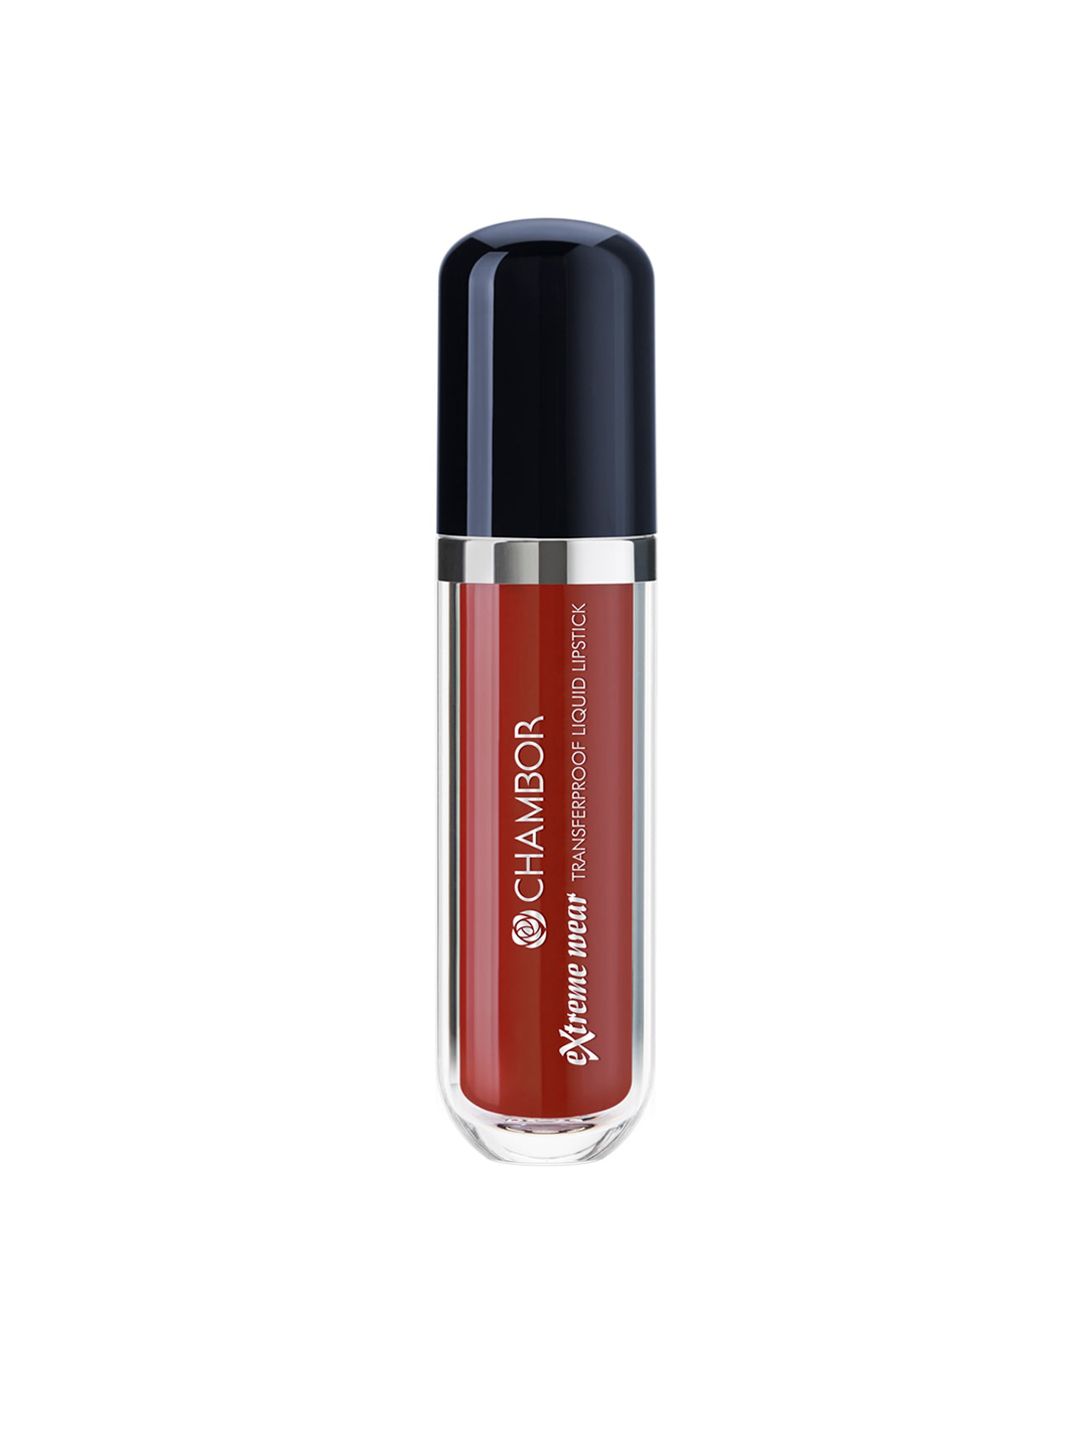 CHAMBOR Extreme Wear Transferproof Liquid Lipstick DARK AMBER #464 6 ml Price in India